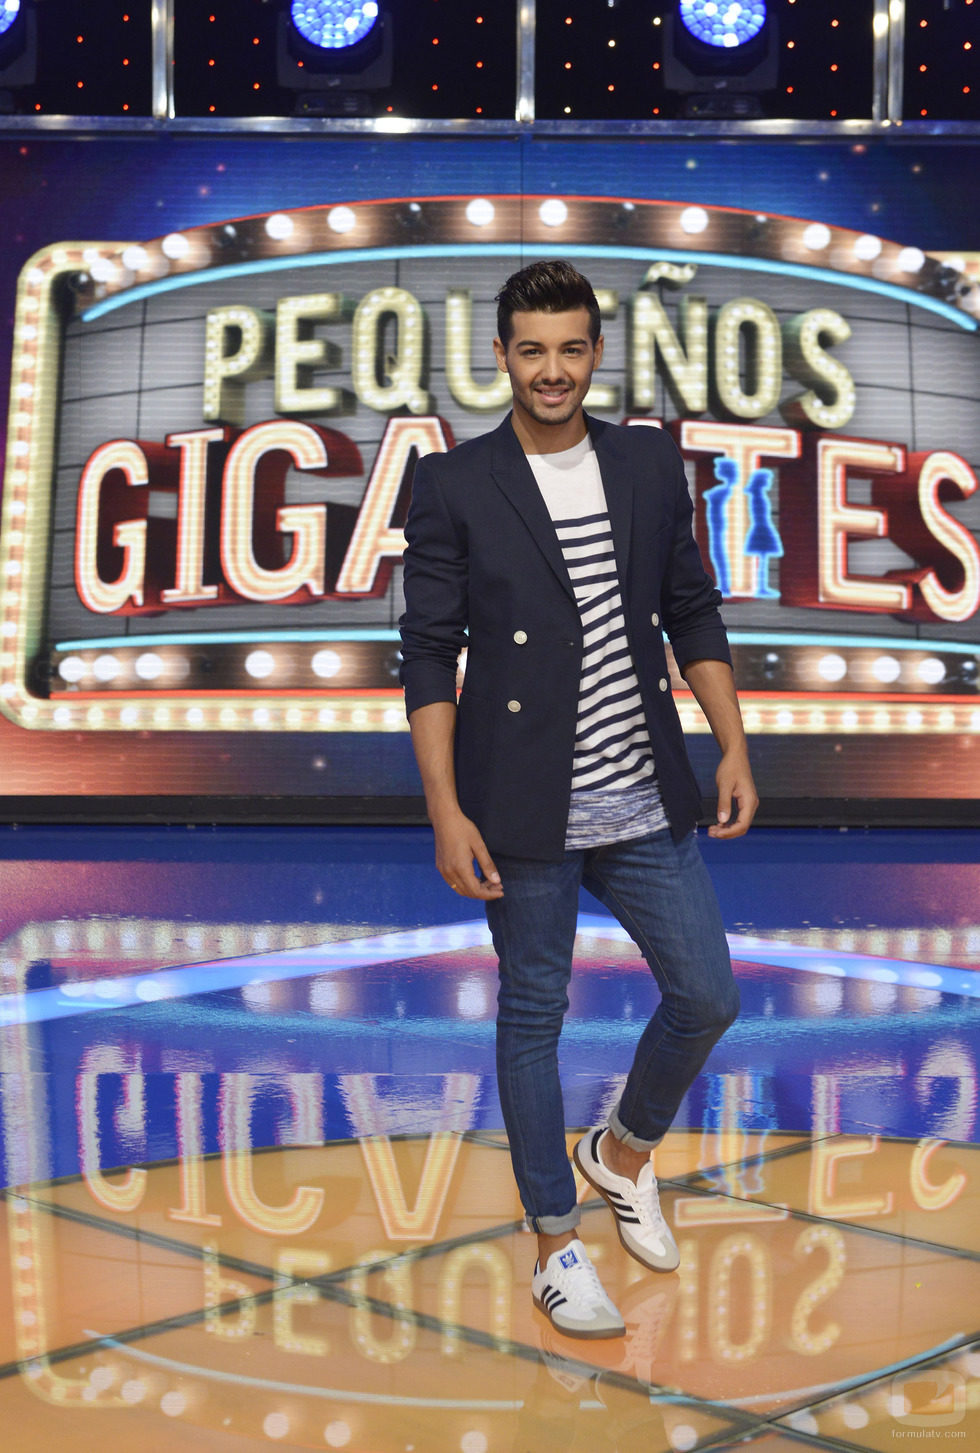 Jorge González se estrenará como padrino en 'Pequeños Gigantes'